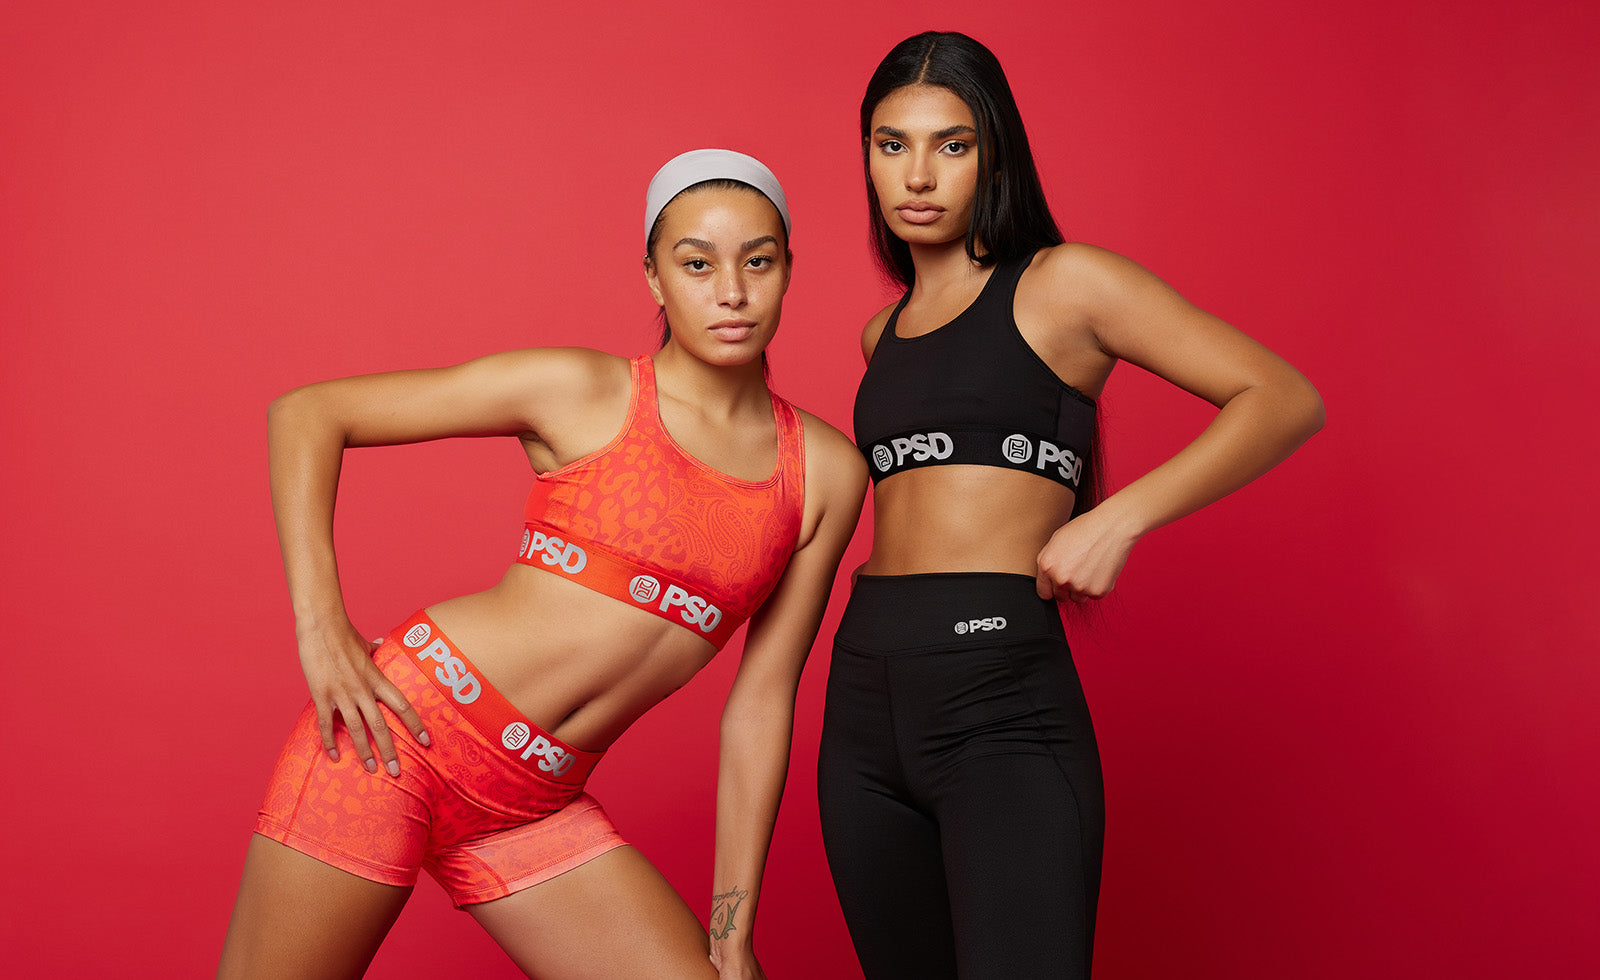 Let's Gym Brazilian Fashion Fitness Clothing Activewear Jumpsuit Premium